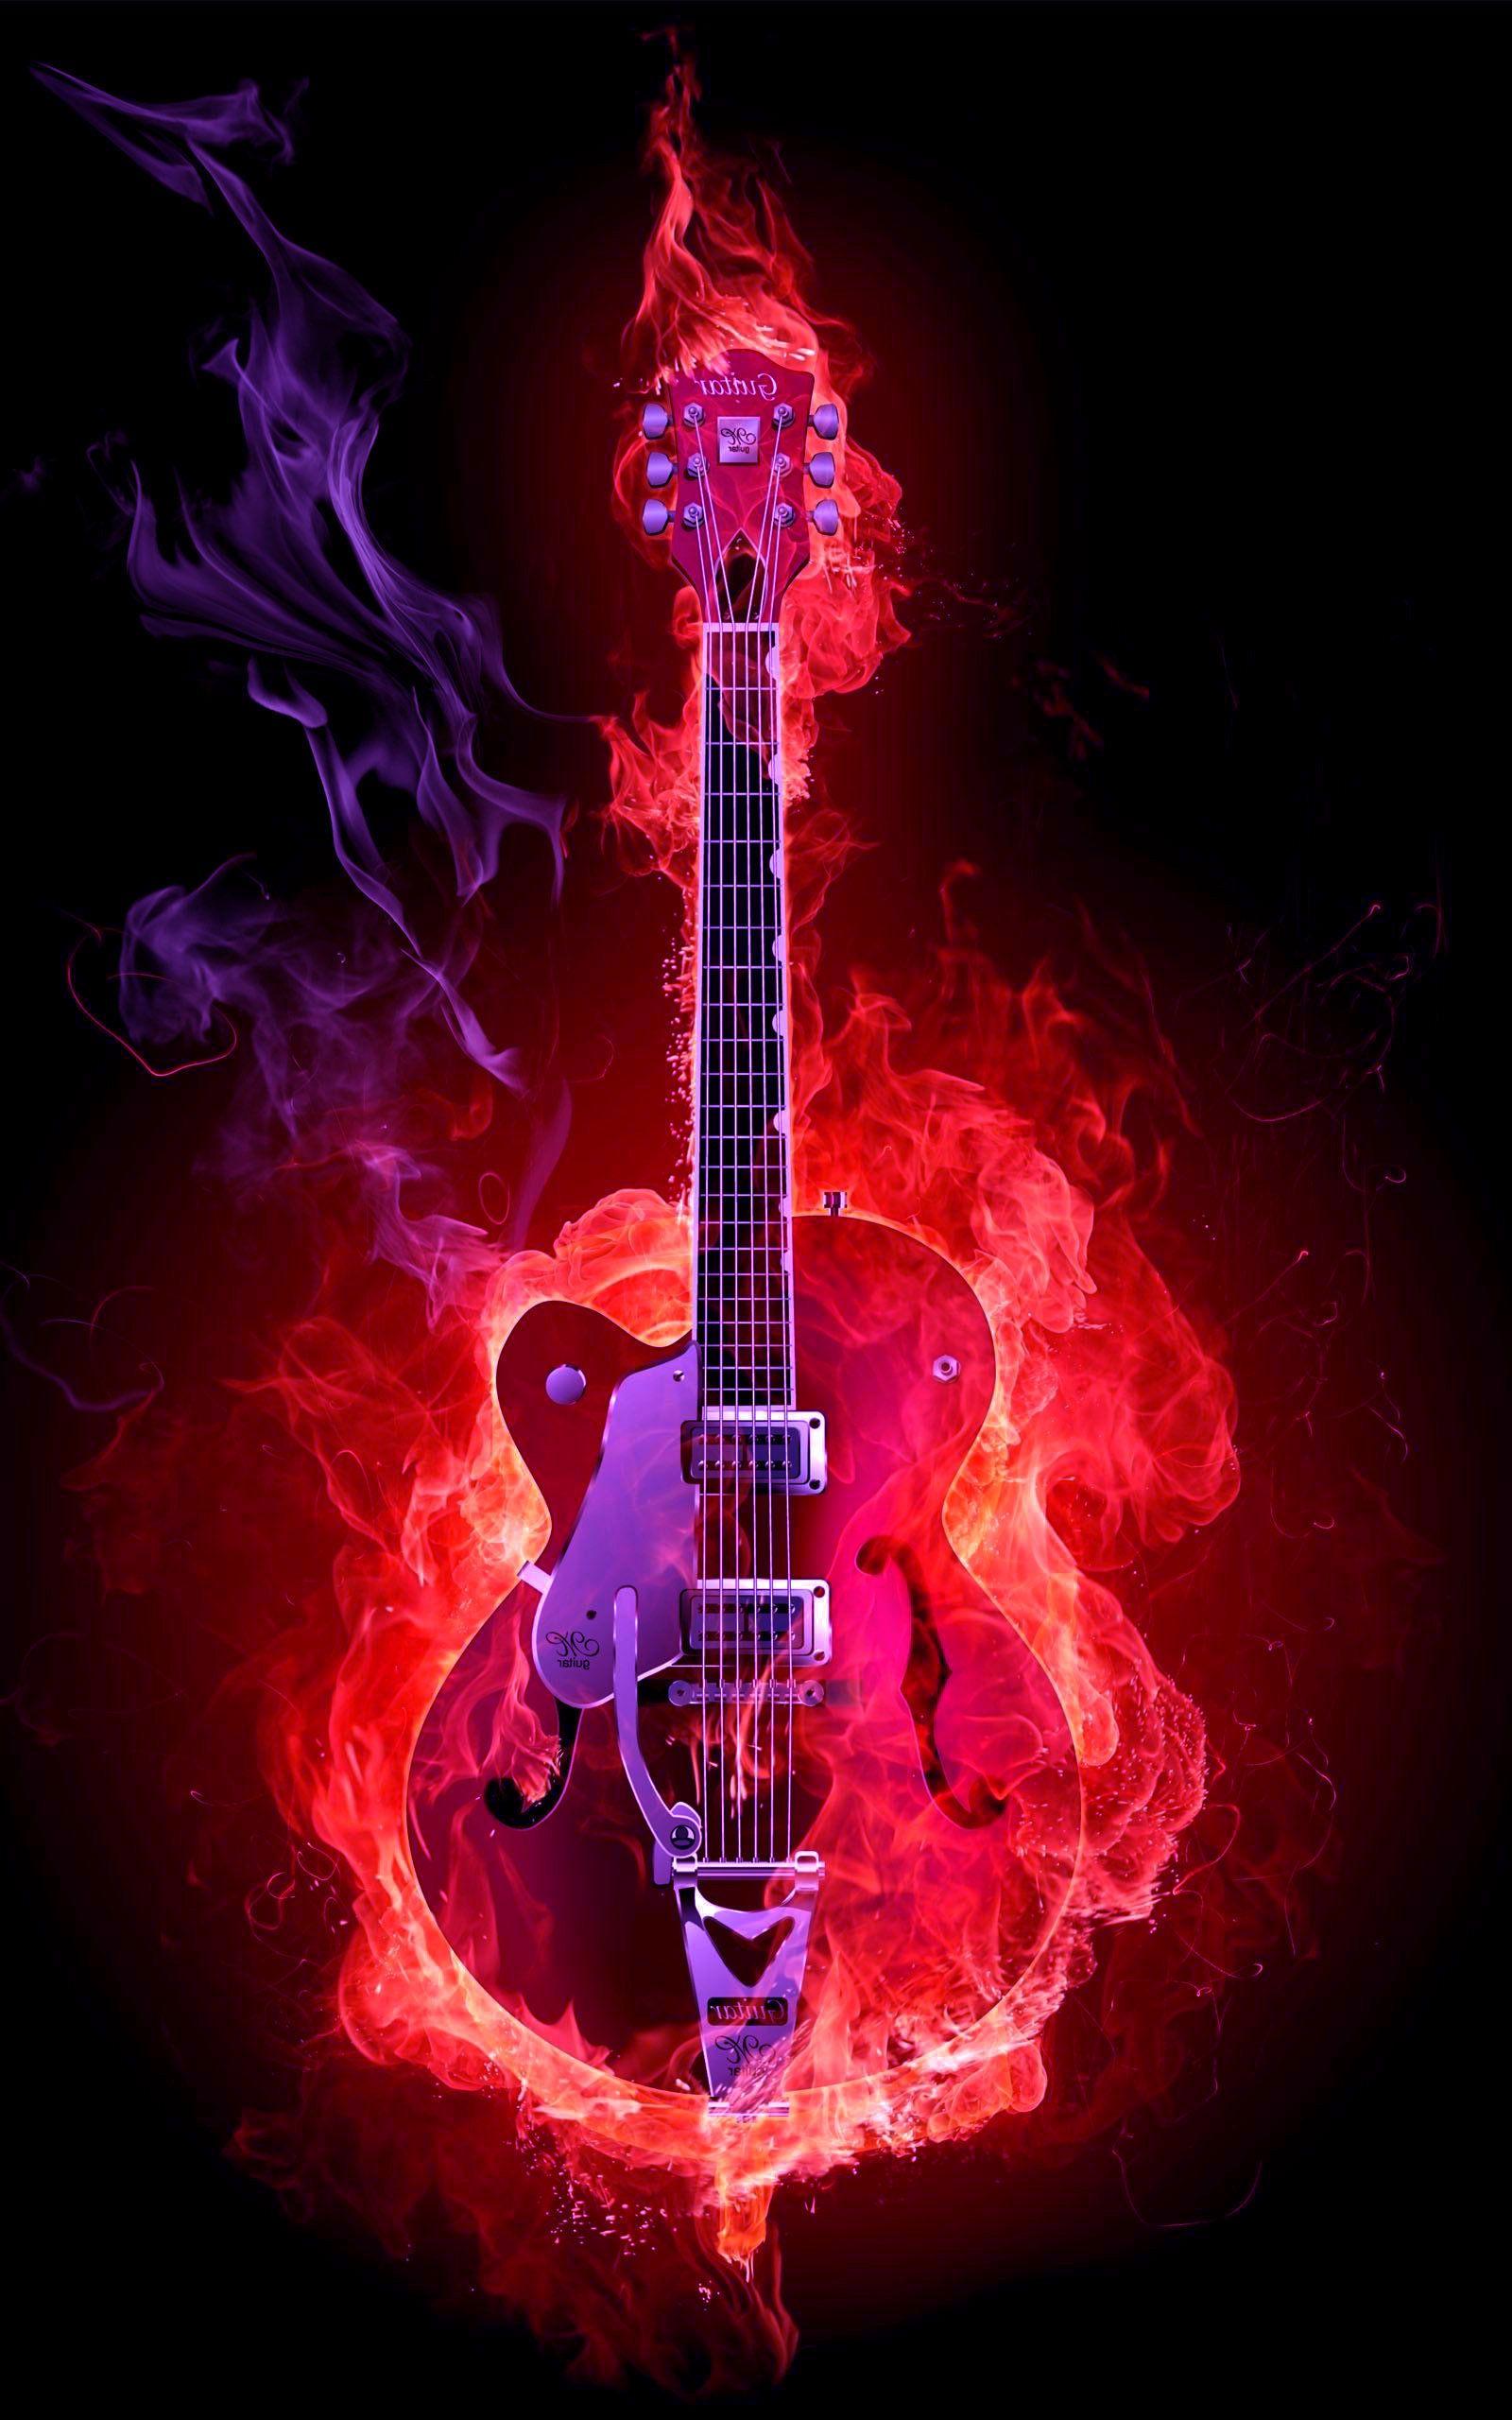 Flame Guitar HD Wallpaper 1600×2560 Definition Wallpaper. Daily Screens Id 3331. Music Guitar Art, Music Artwork, Guitar Wall Art